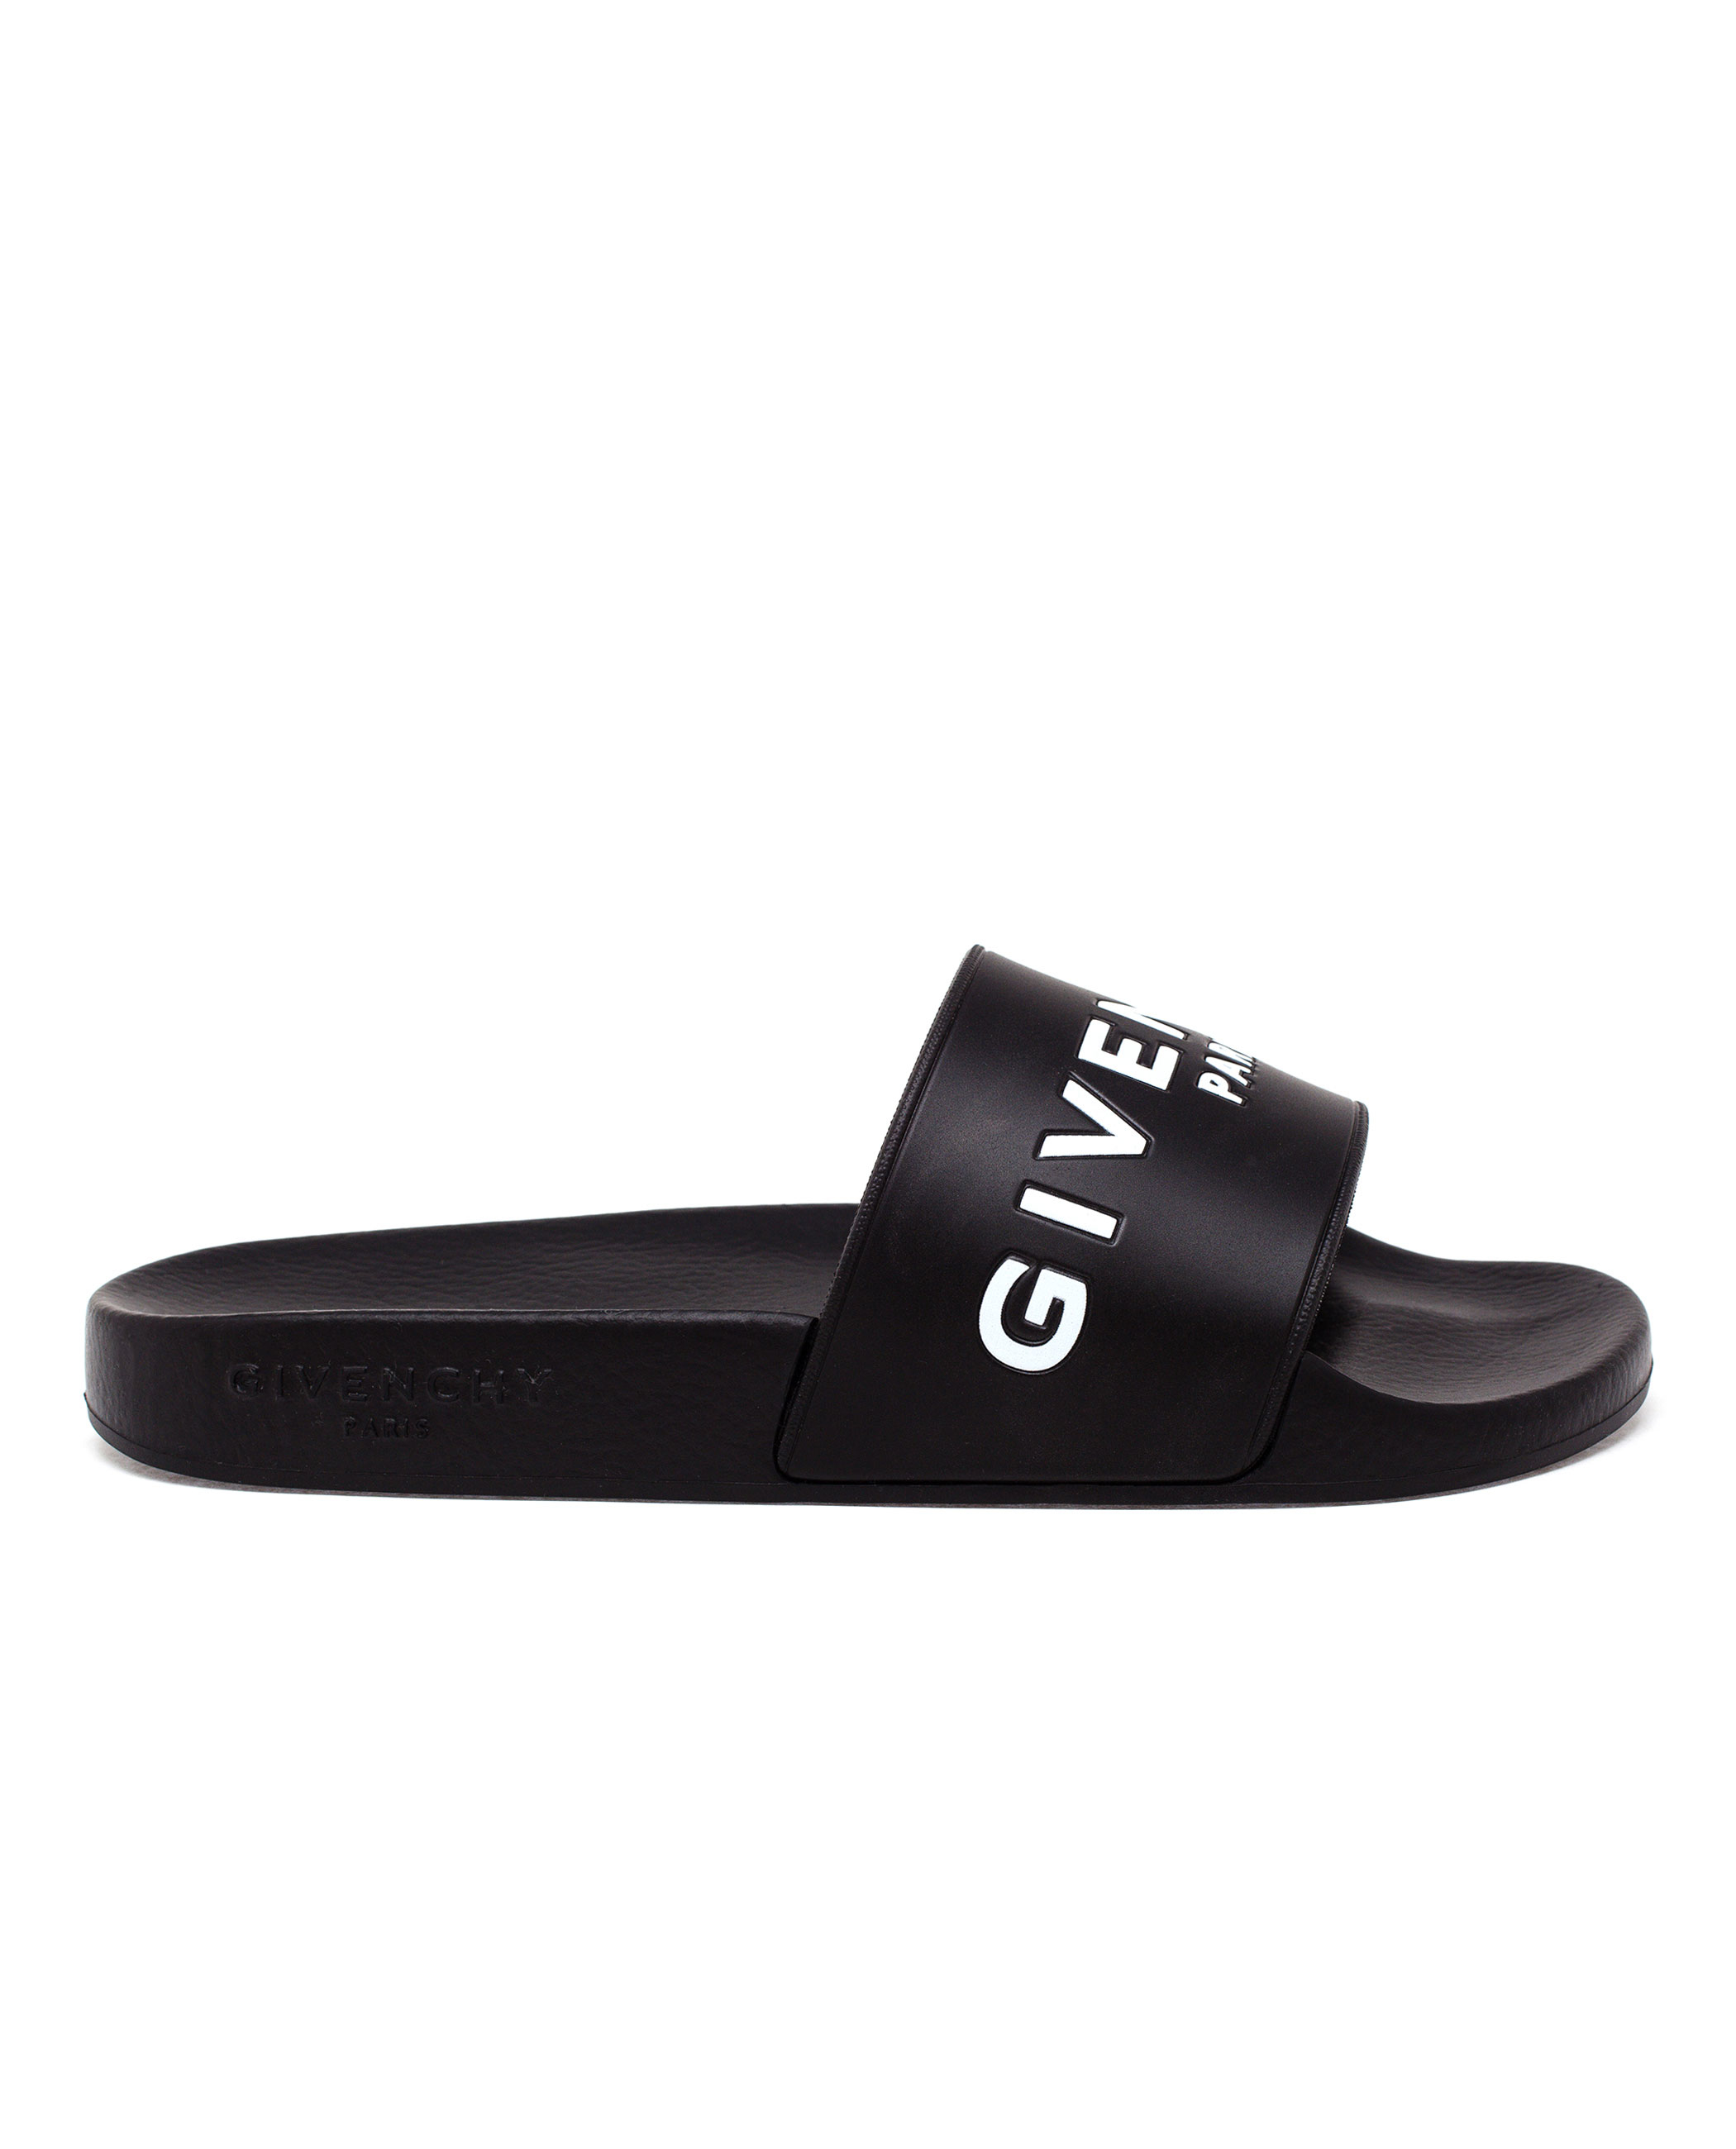 Givenchy Logo Pool Slide Sandals in Black - Lyst